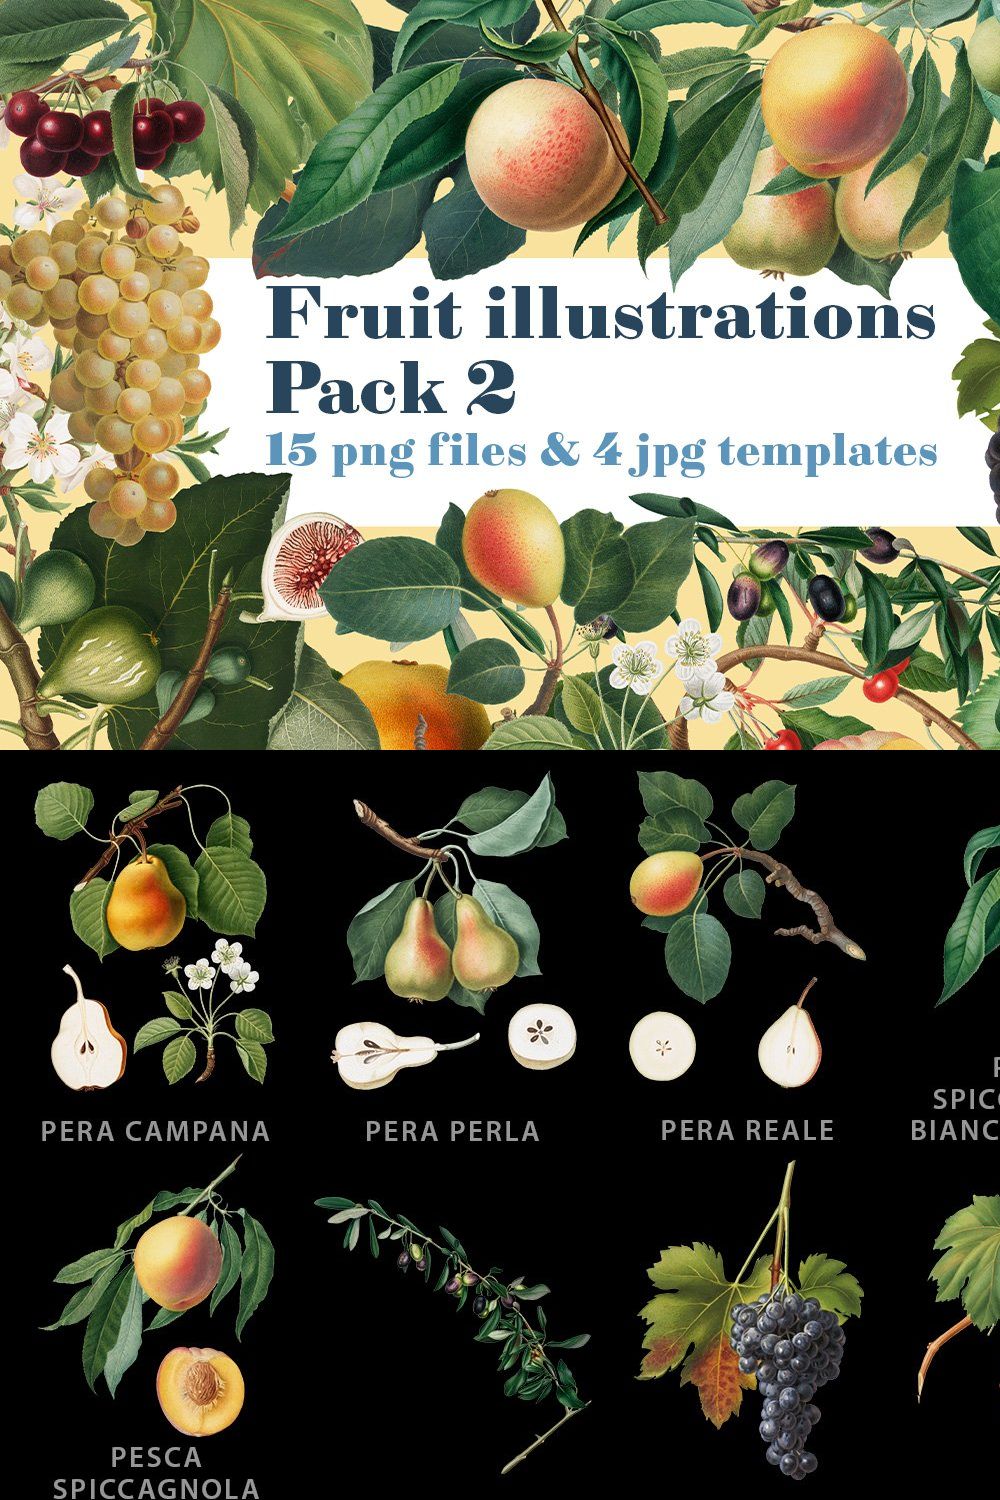 Fruit illustrations pack 2 pinterest preview image.